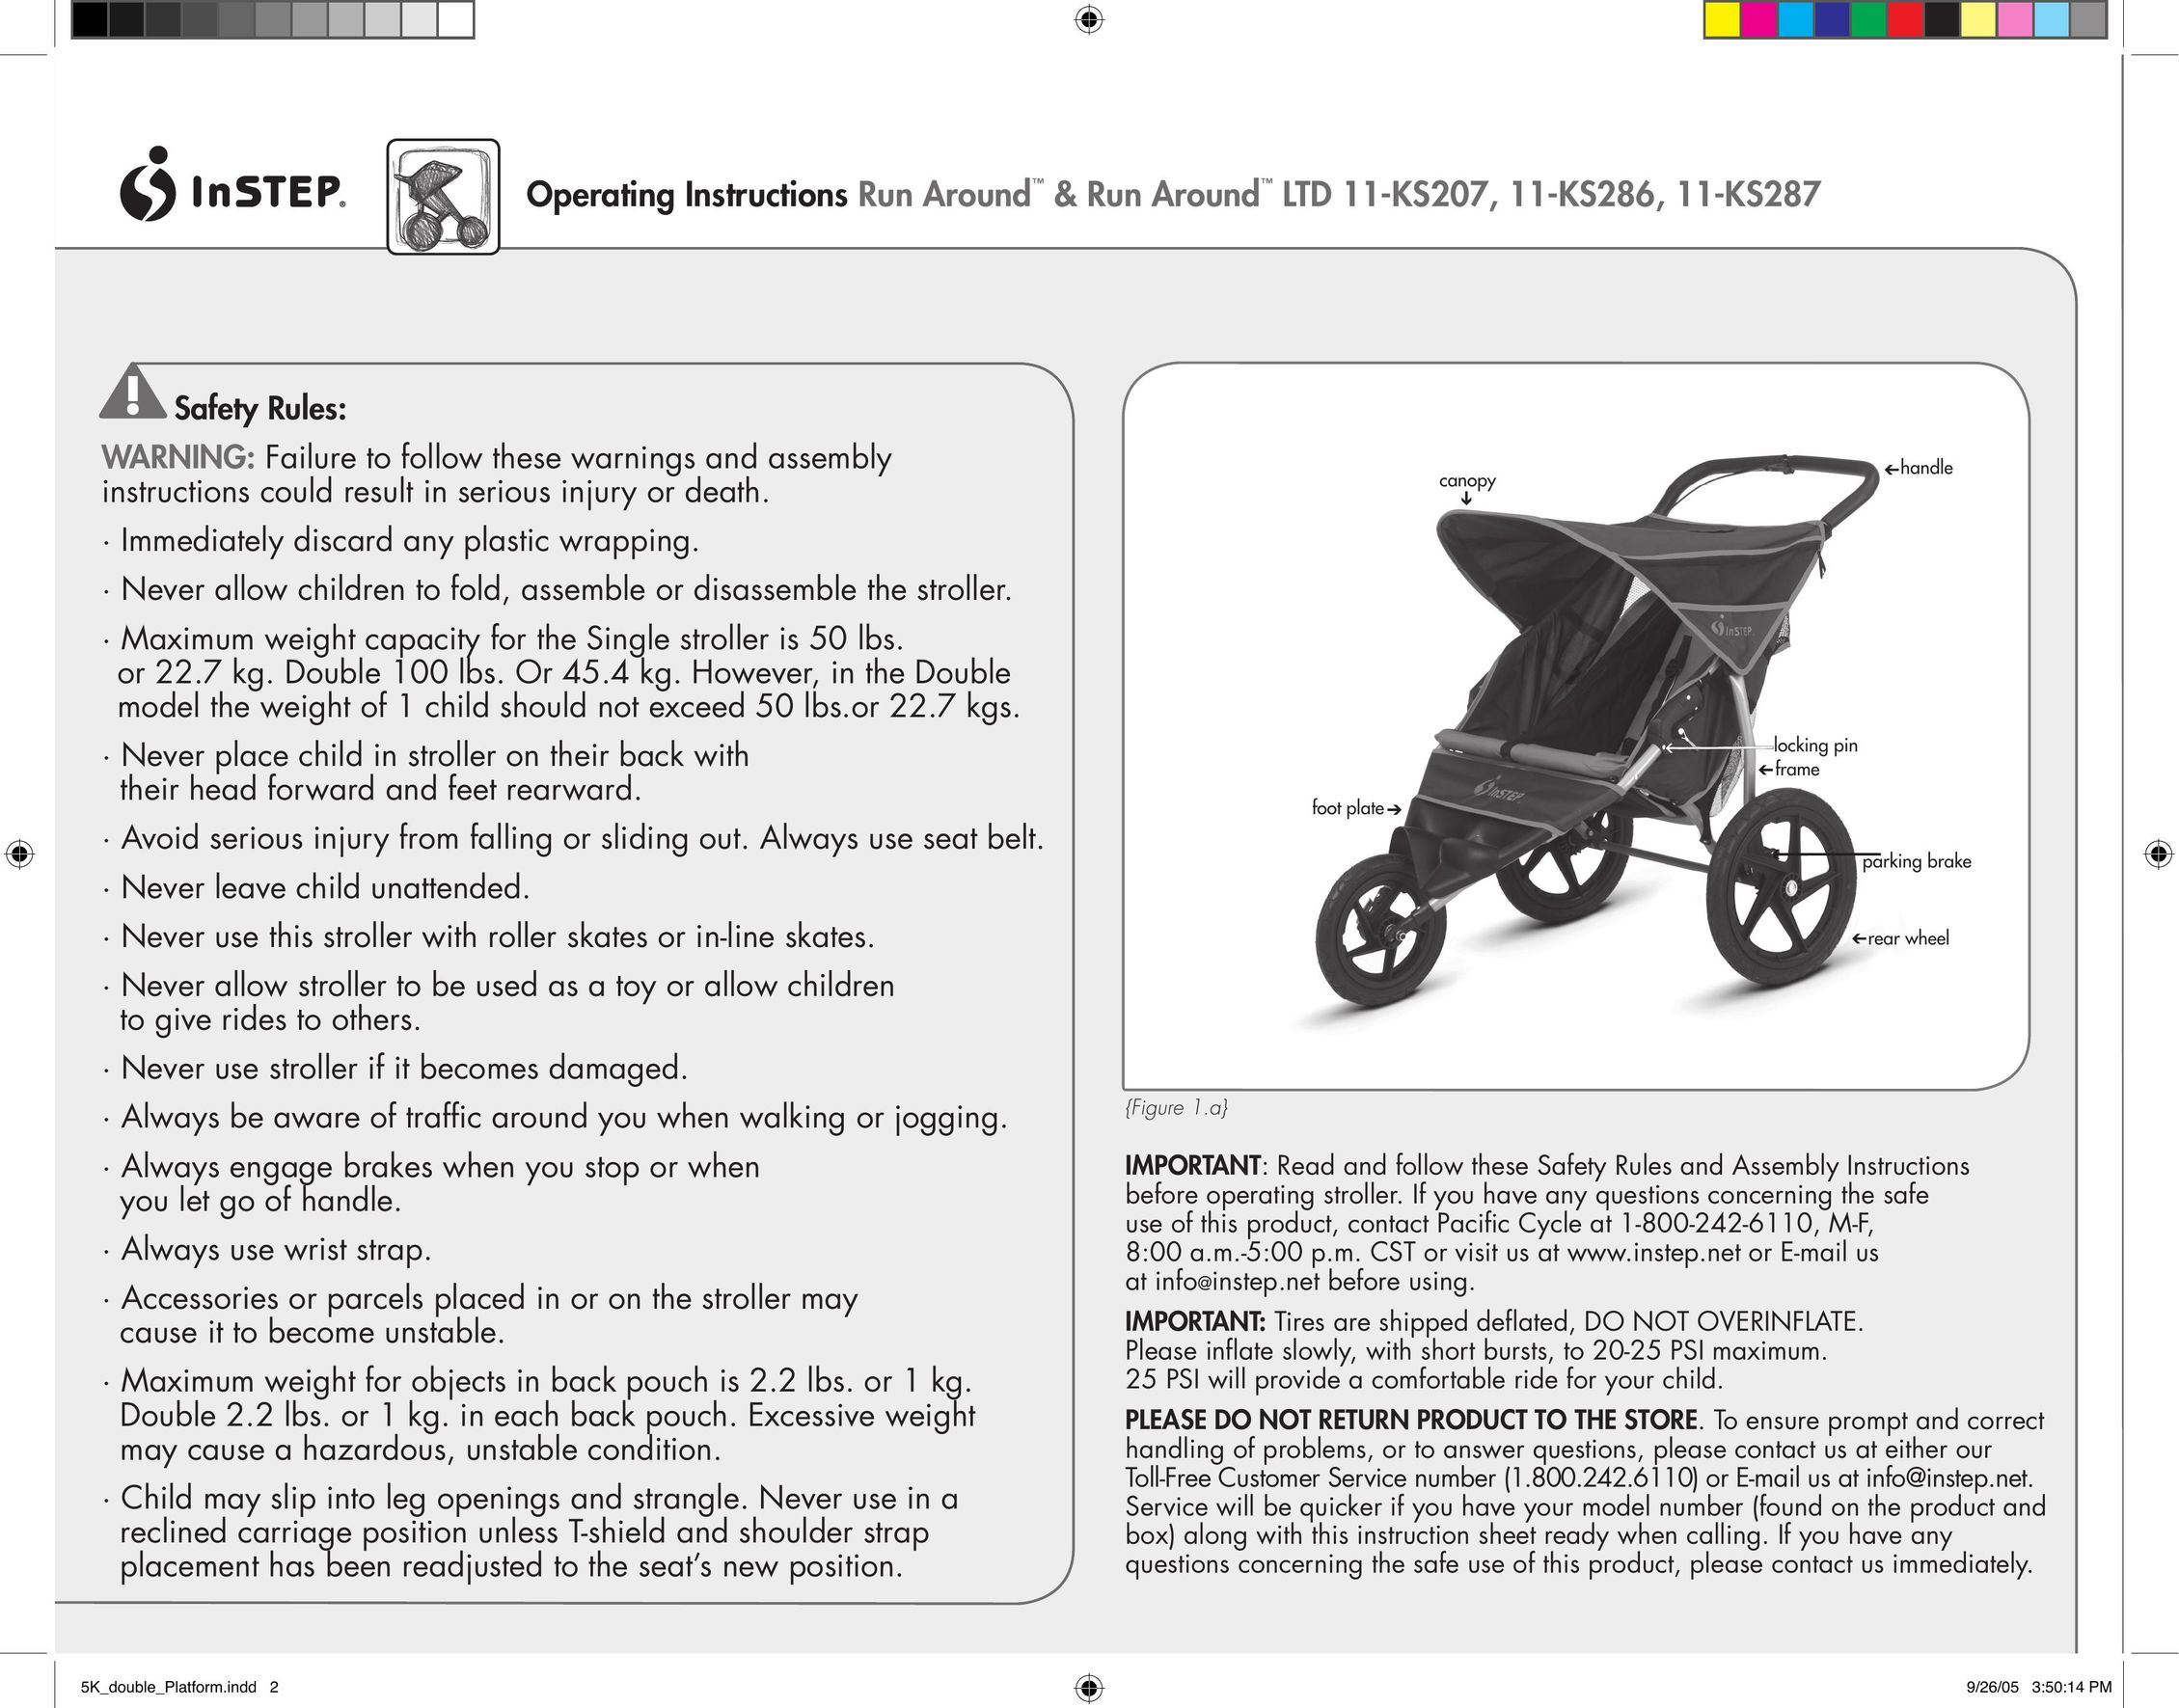 InStep 11-KS207 Stroller User Manual